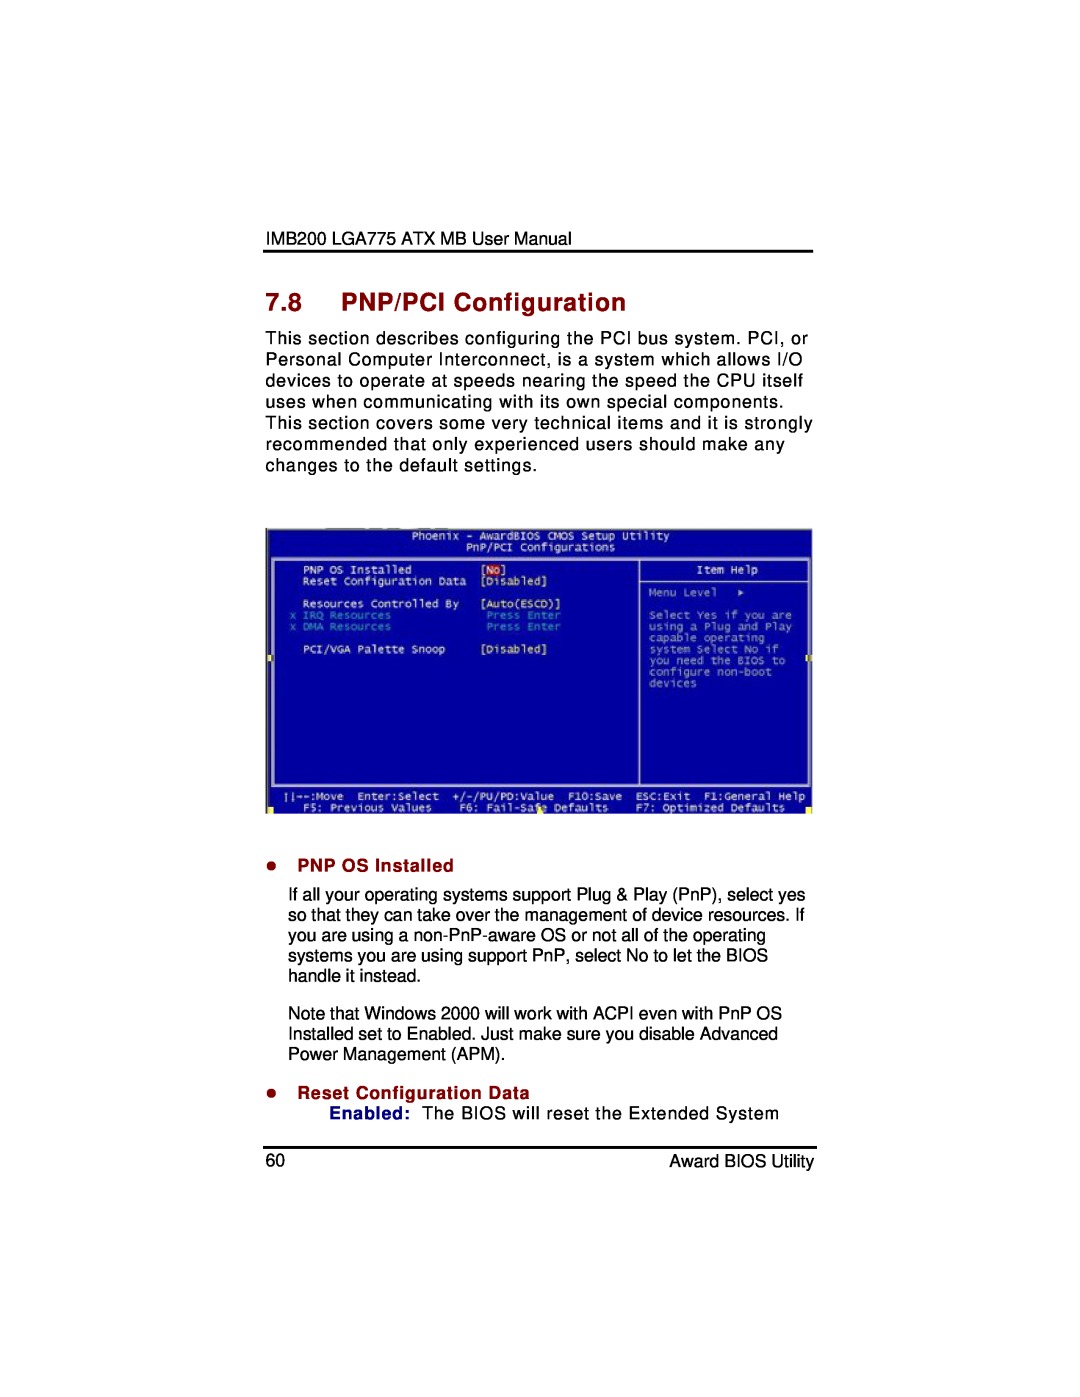 Intel IMB200VGE user manual 7.8 PNP/PCI Configuration, z PNP OS Installed, z Reset Configuration Data 